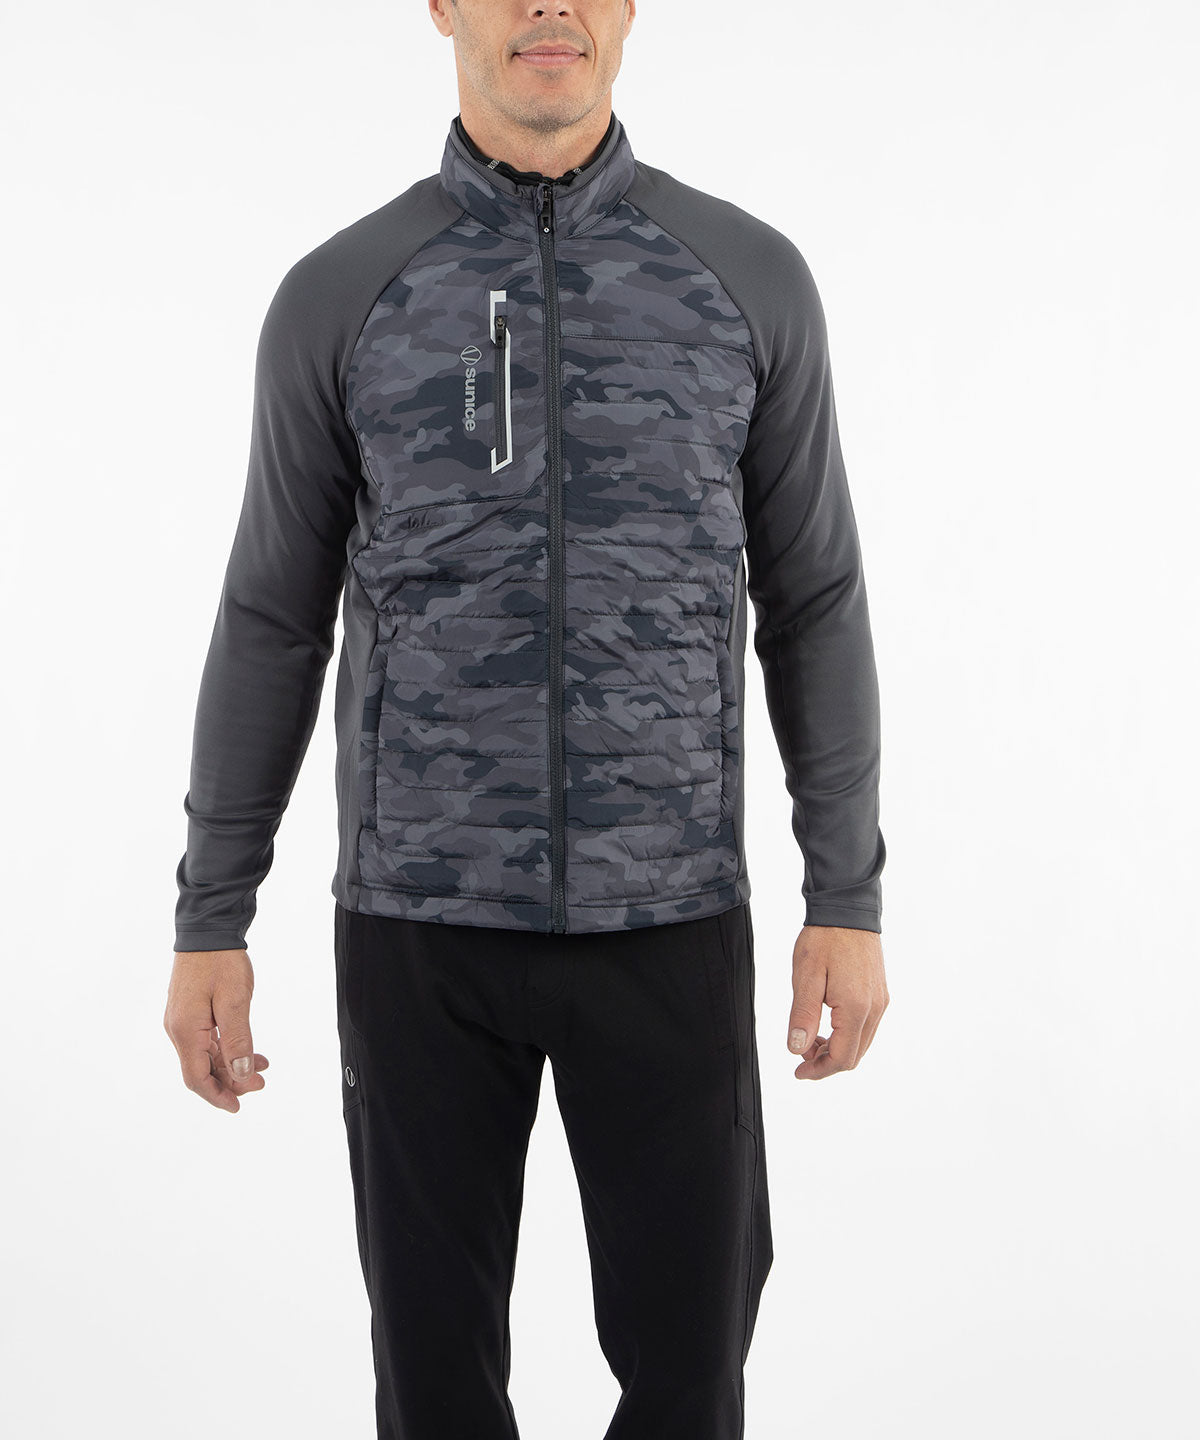 Men's jacket in melange Stretch Performance fleece